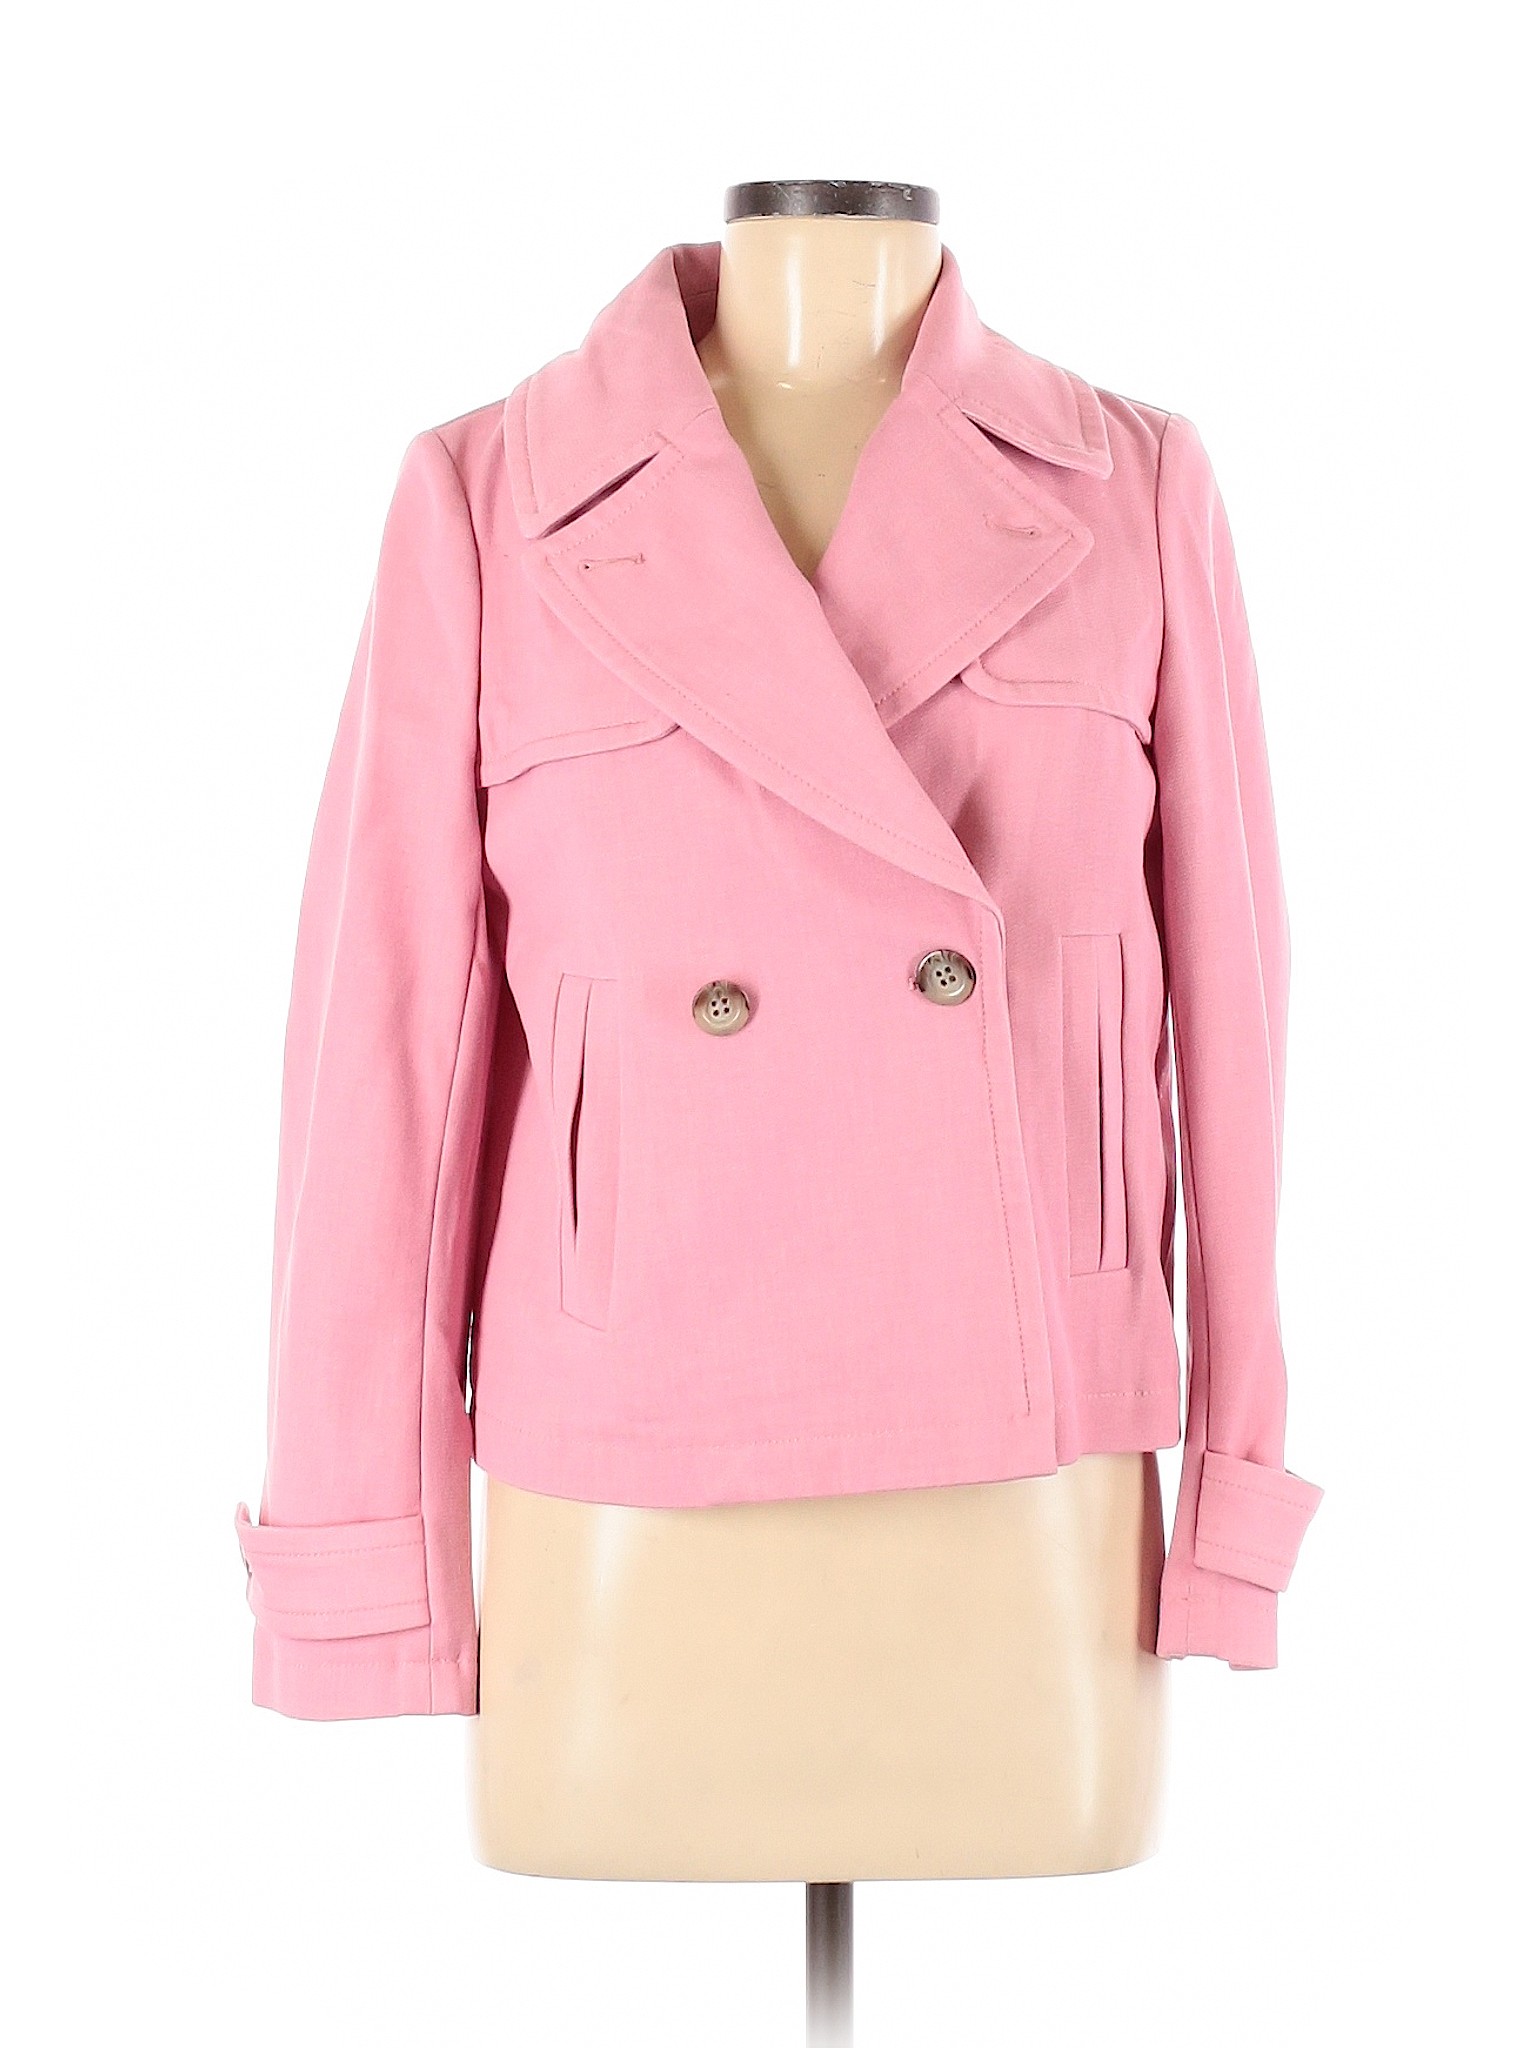 Ann Taylor Women Pink Jacket 8 Petites | eBay